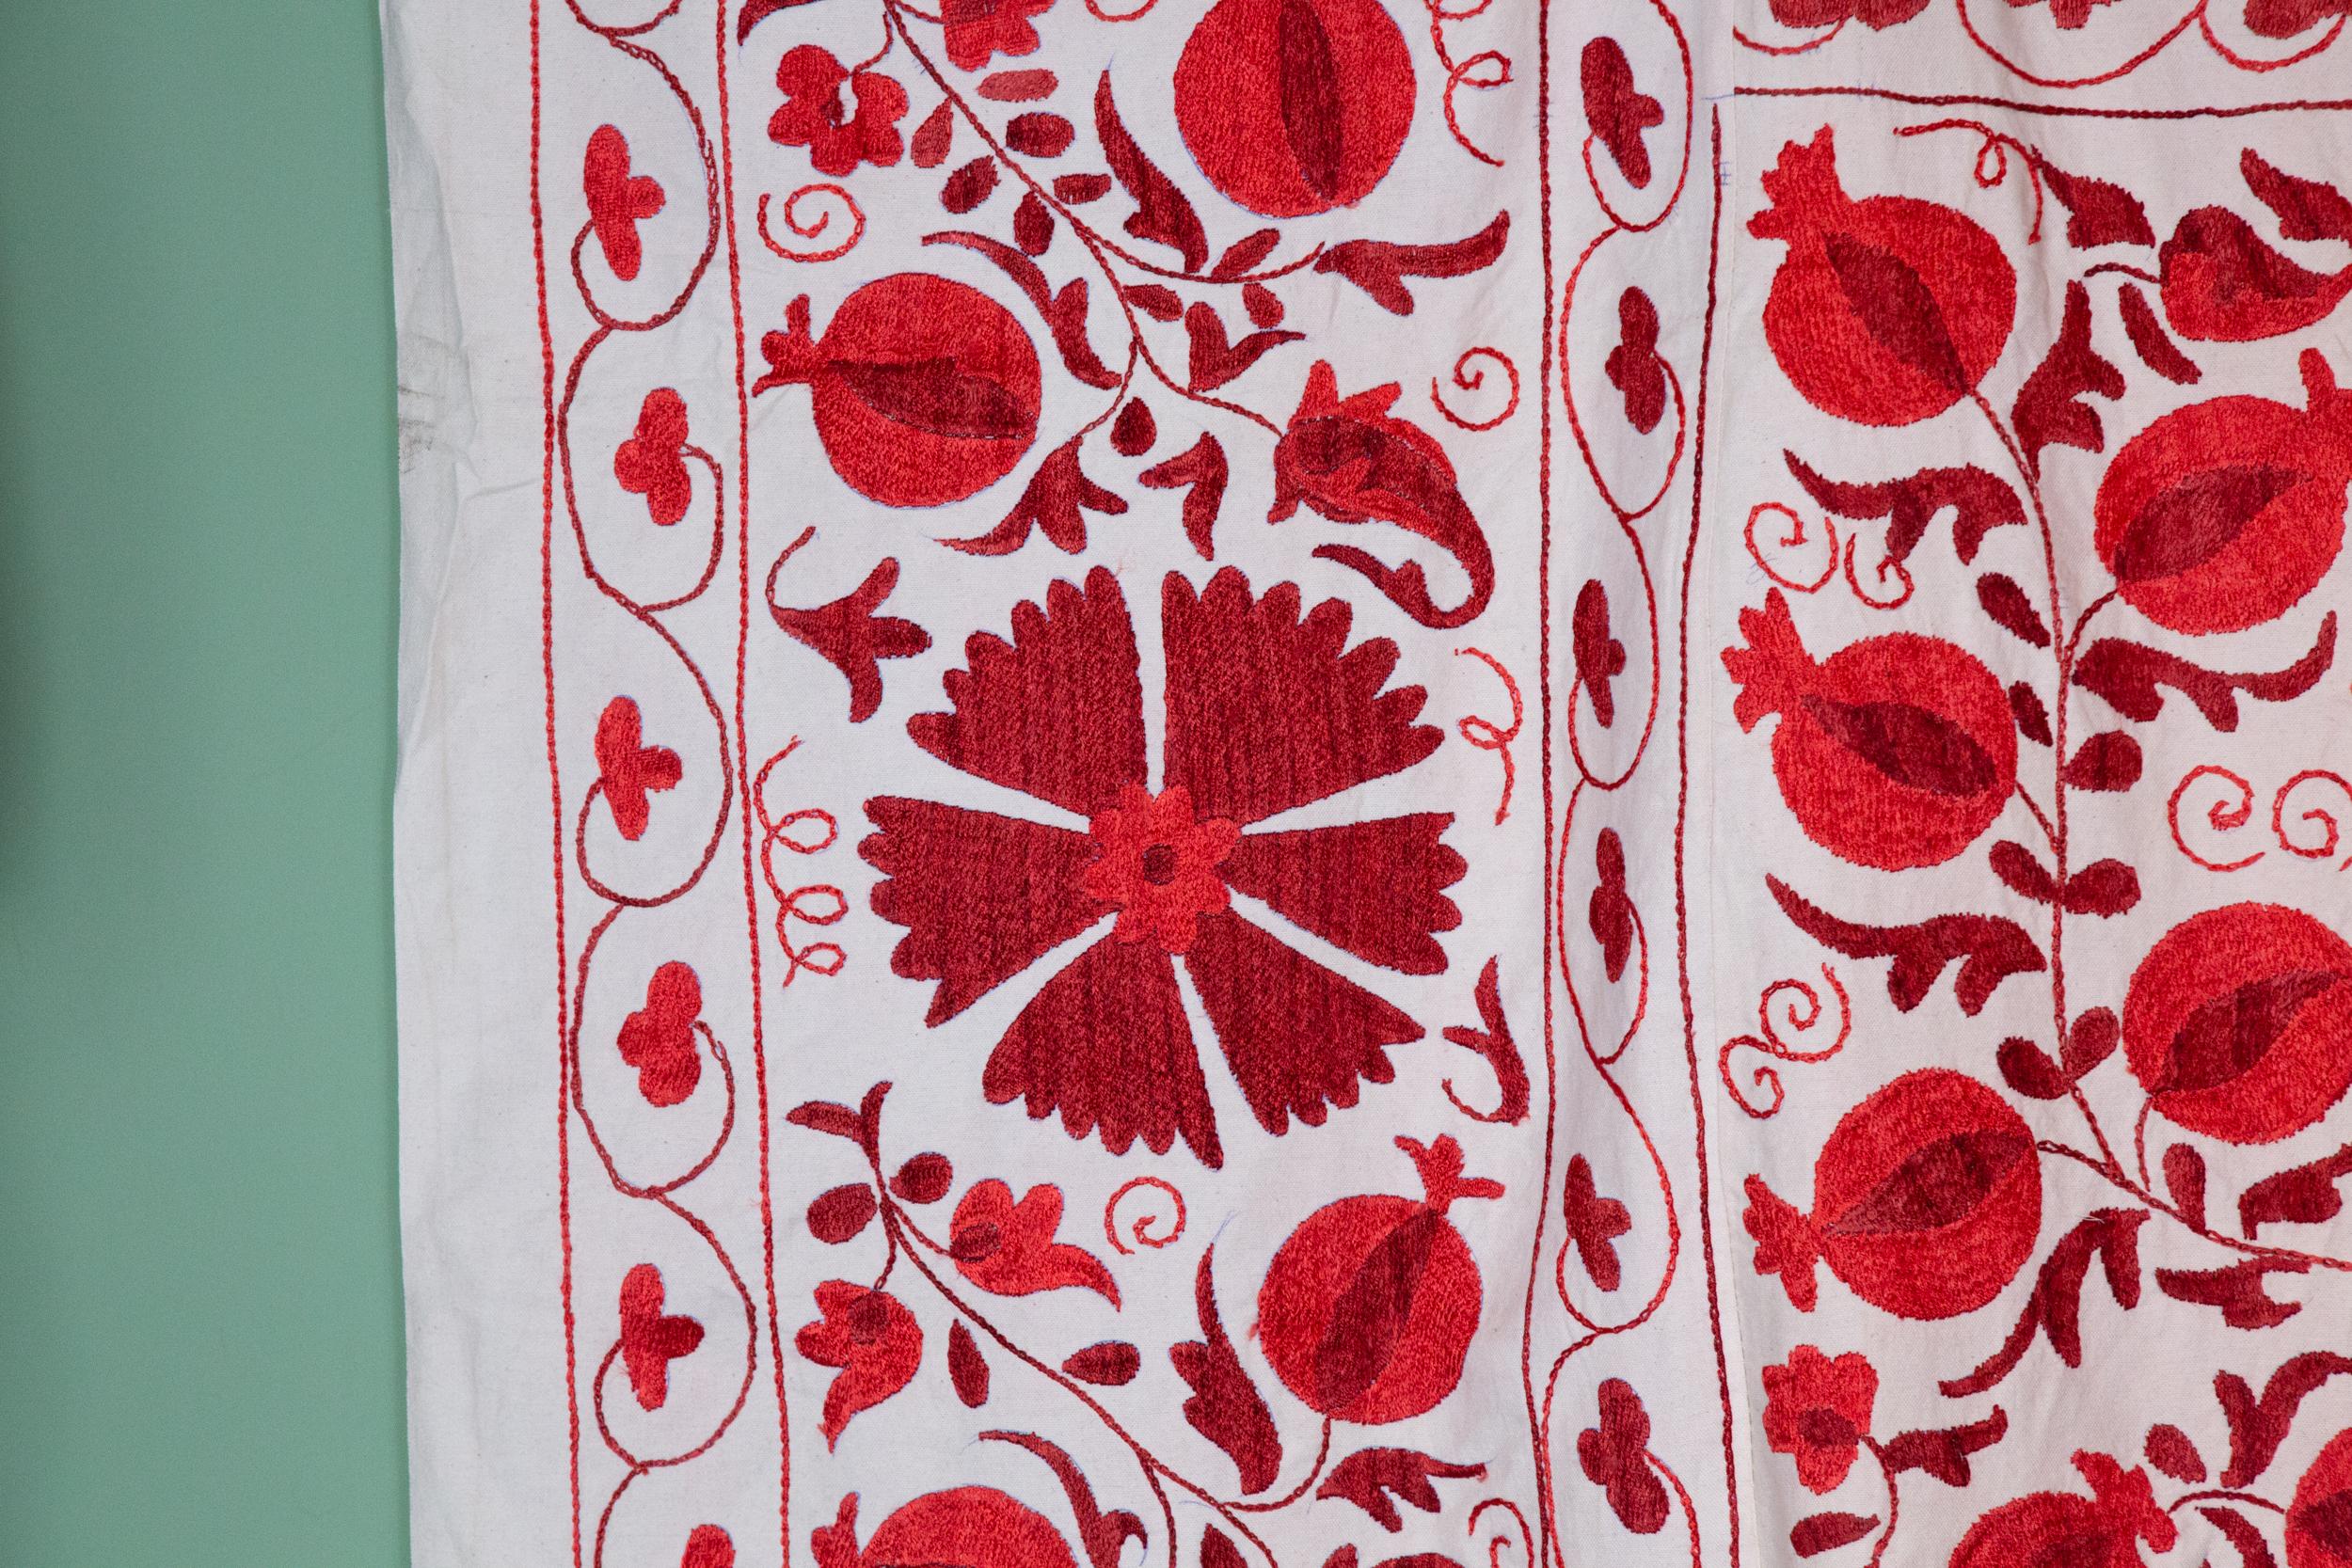 Pomegranate Suzani II. Handmade cotton Suzani with pomegranate designs. Measures: 55